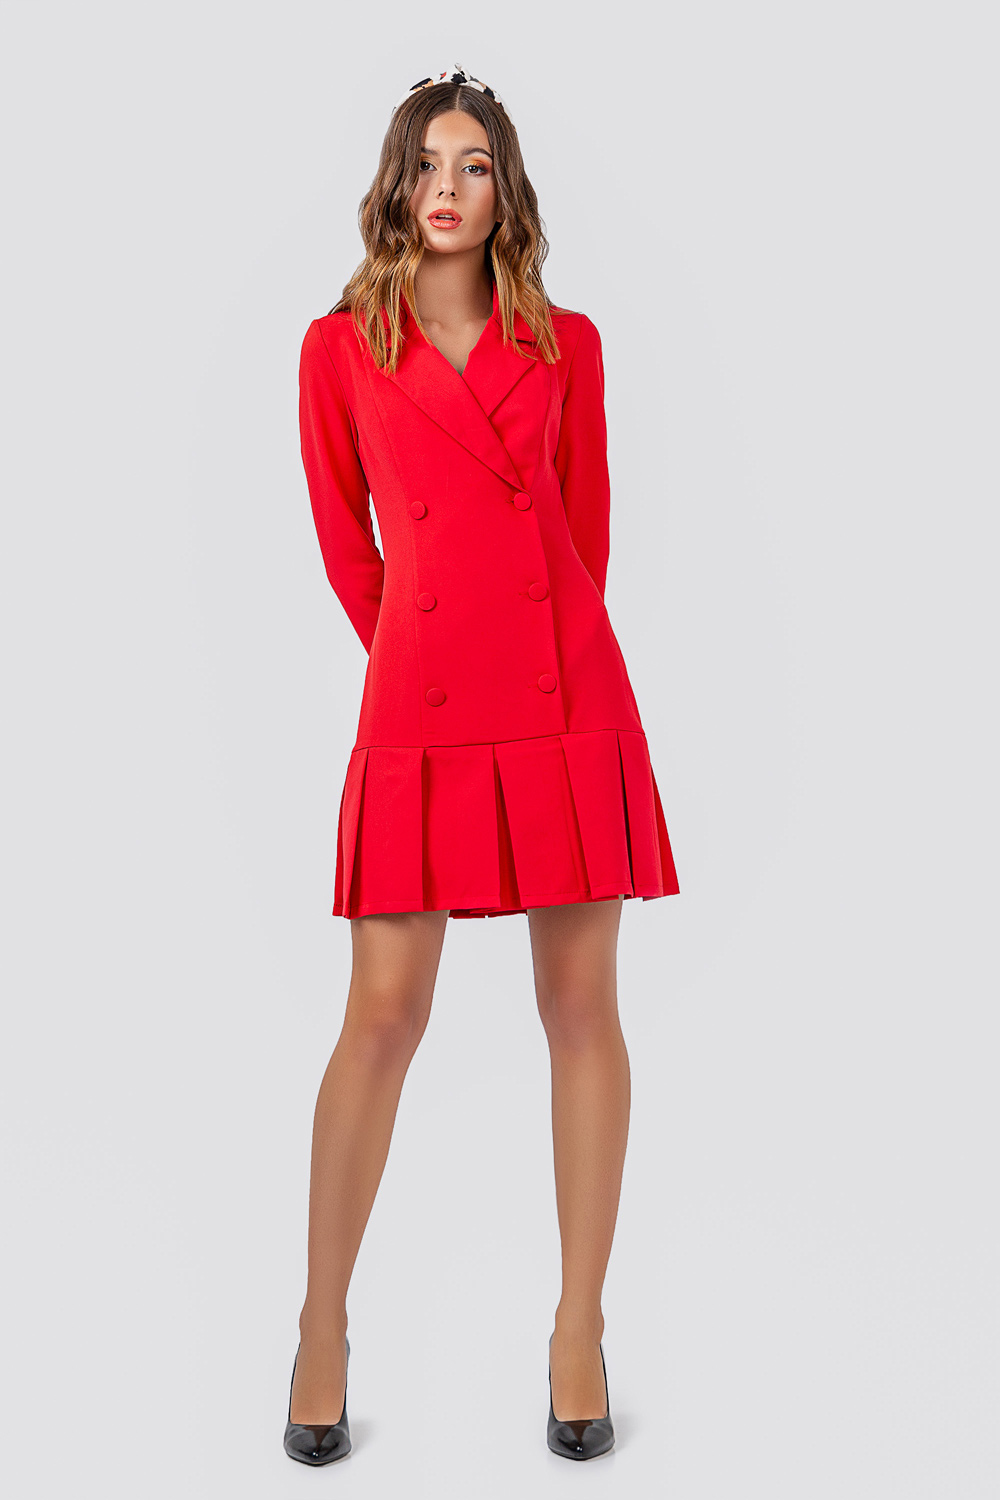 Red buttoned blazer dress